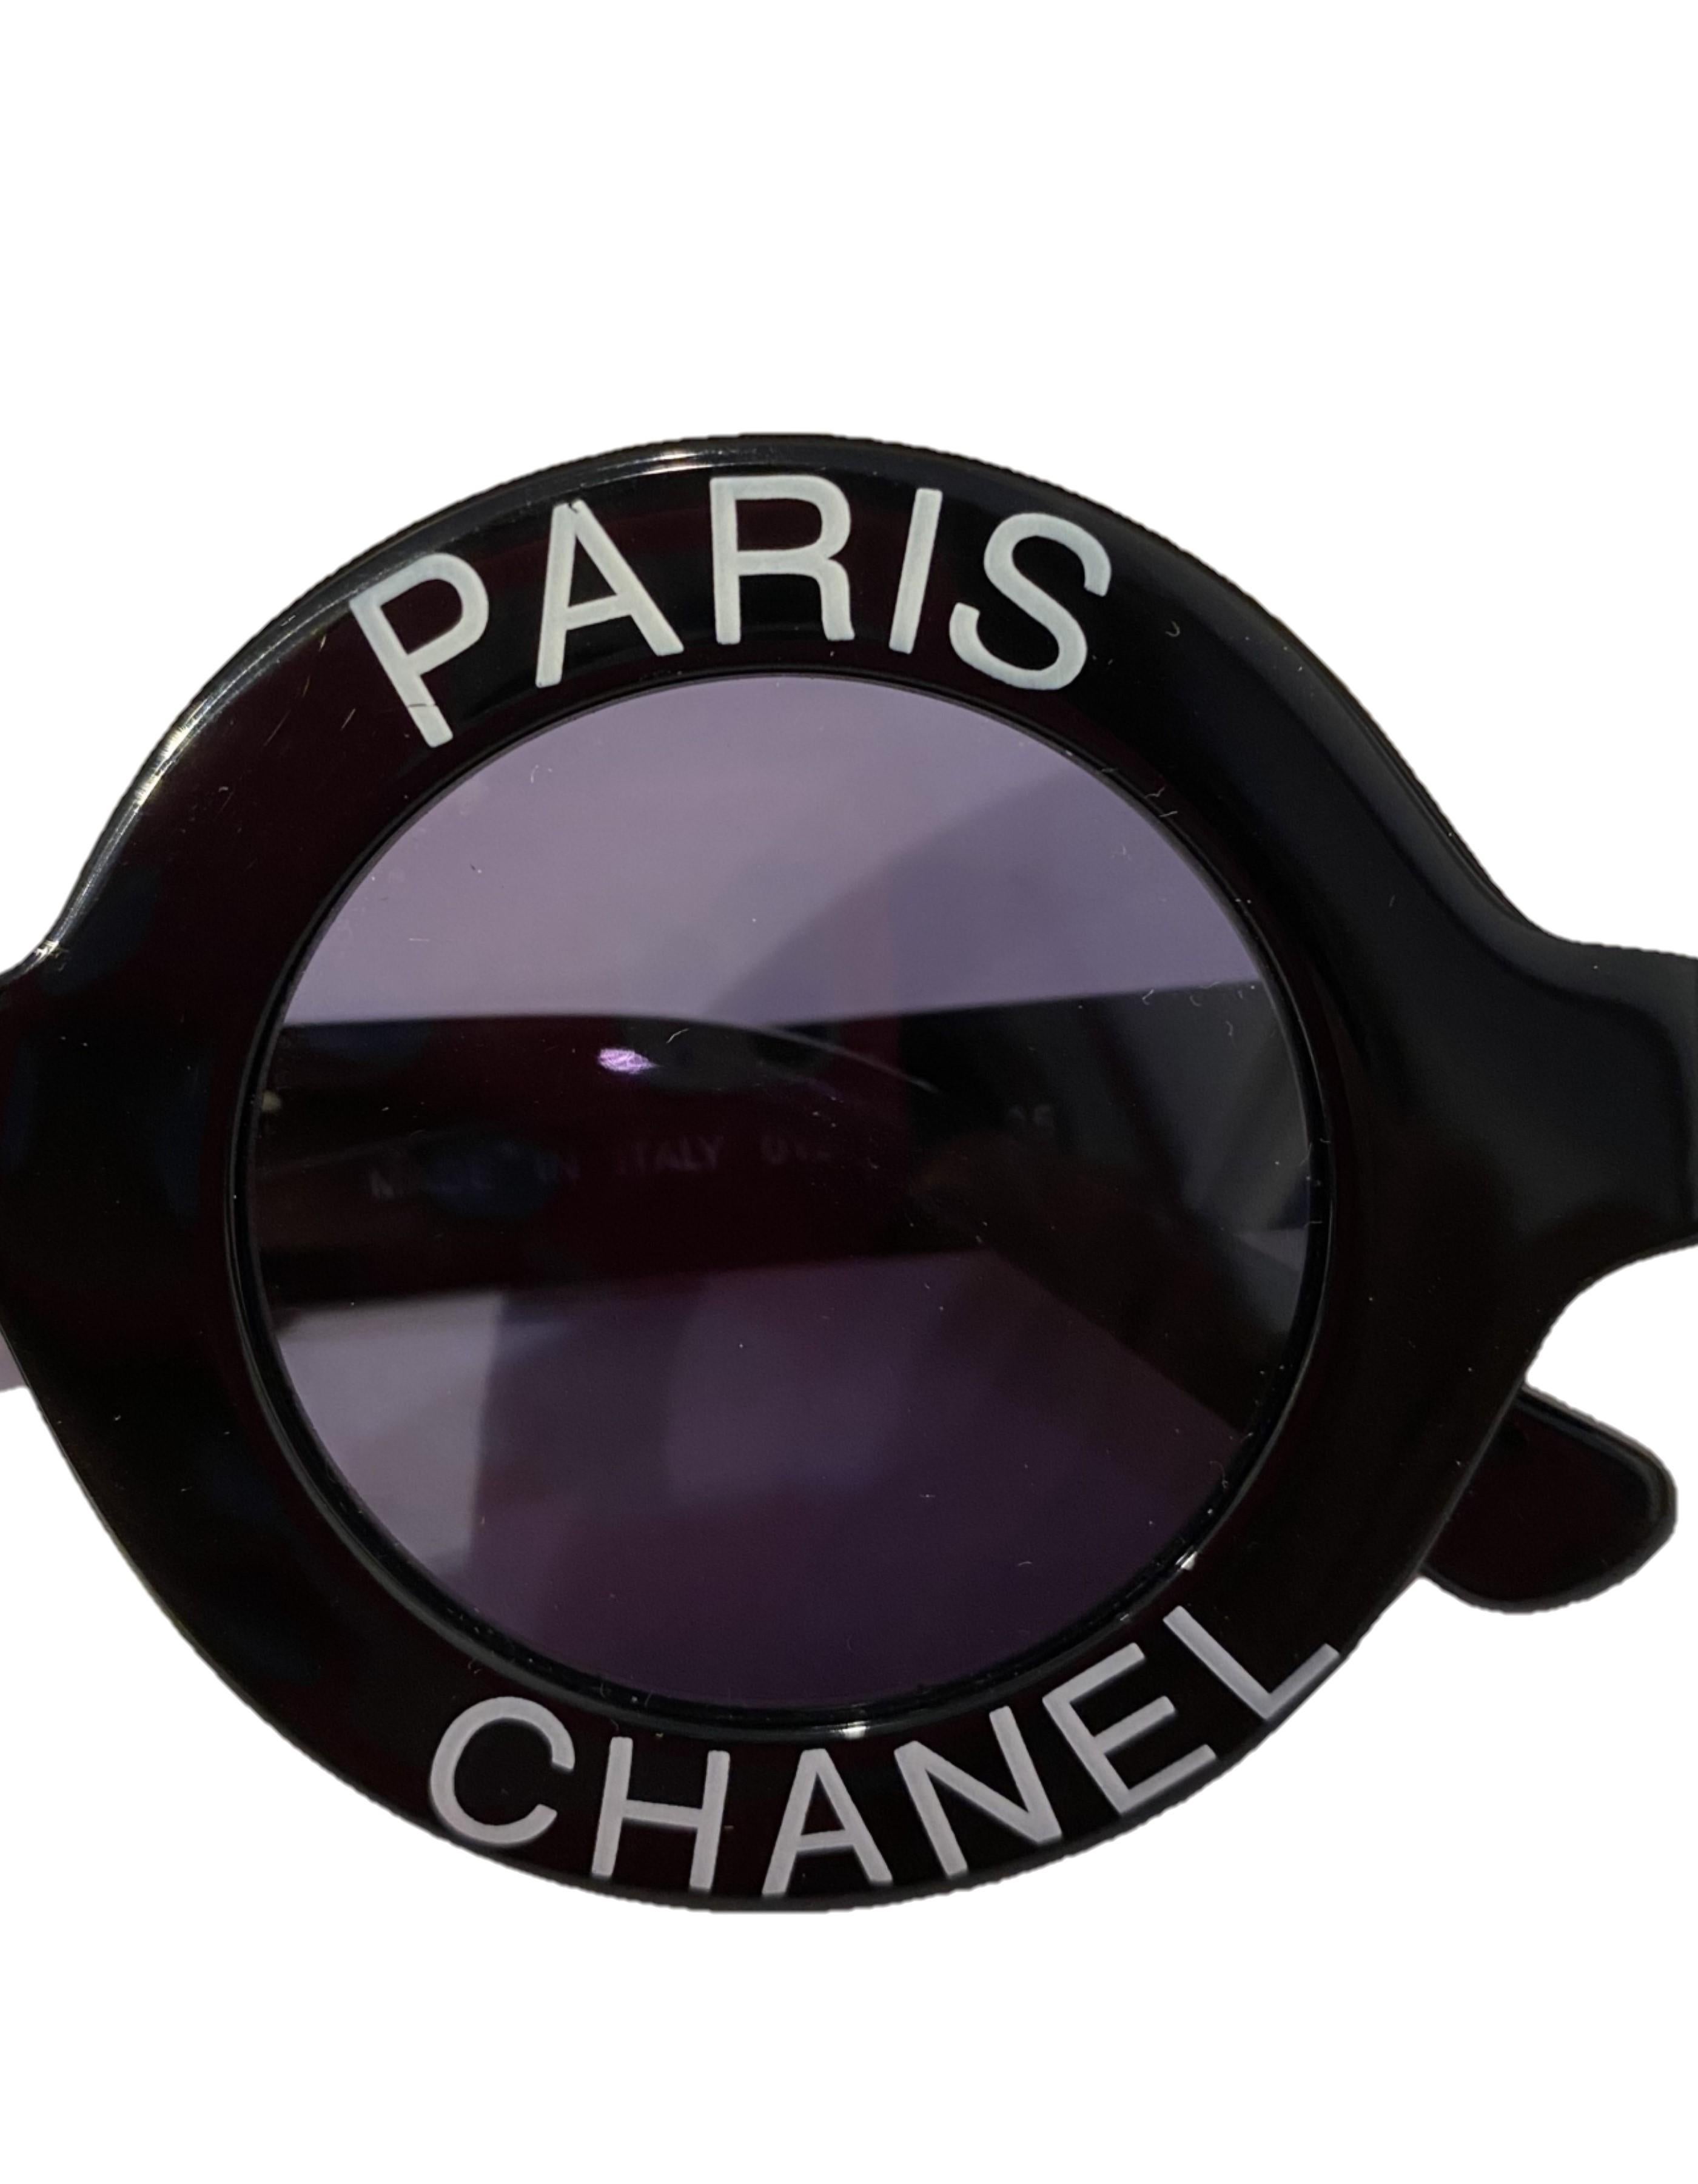 Women's Chanel Vintage 1990s Runway Black Round Sunglasses w/ CHANEL PARIS